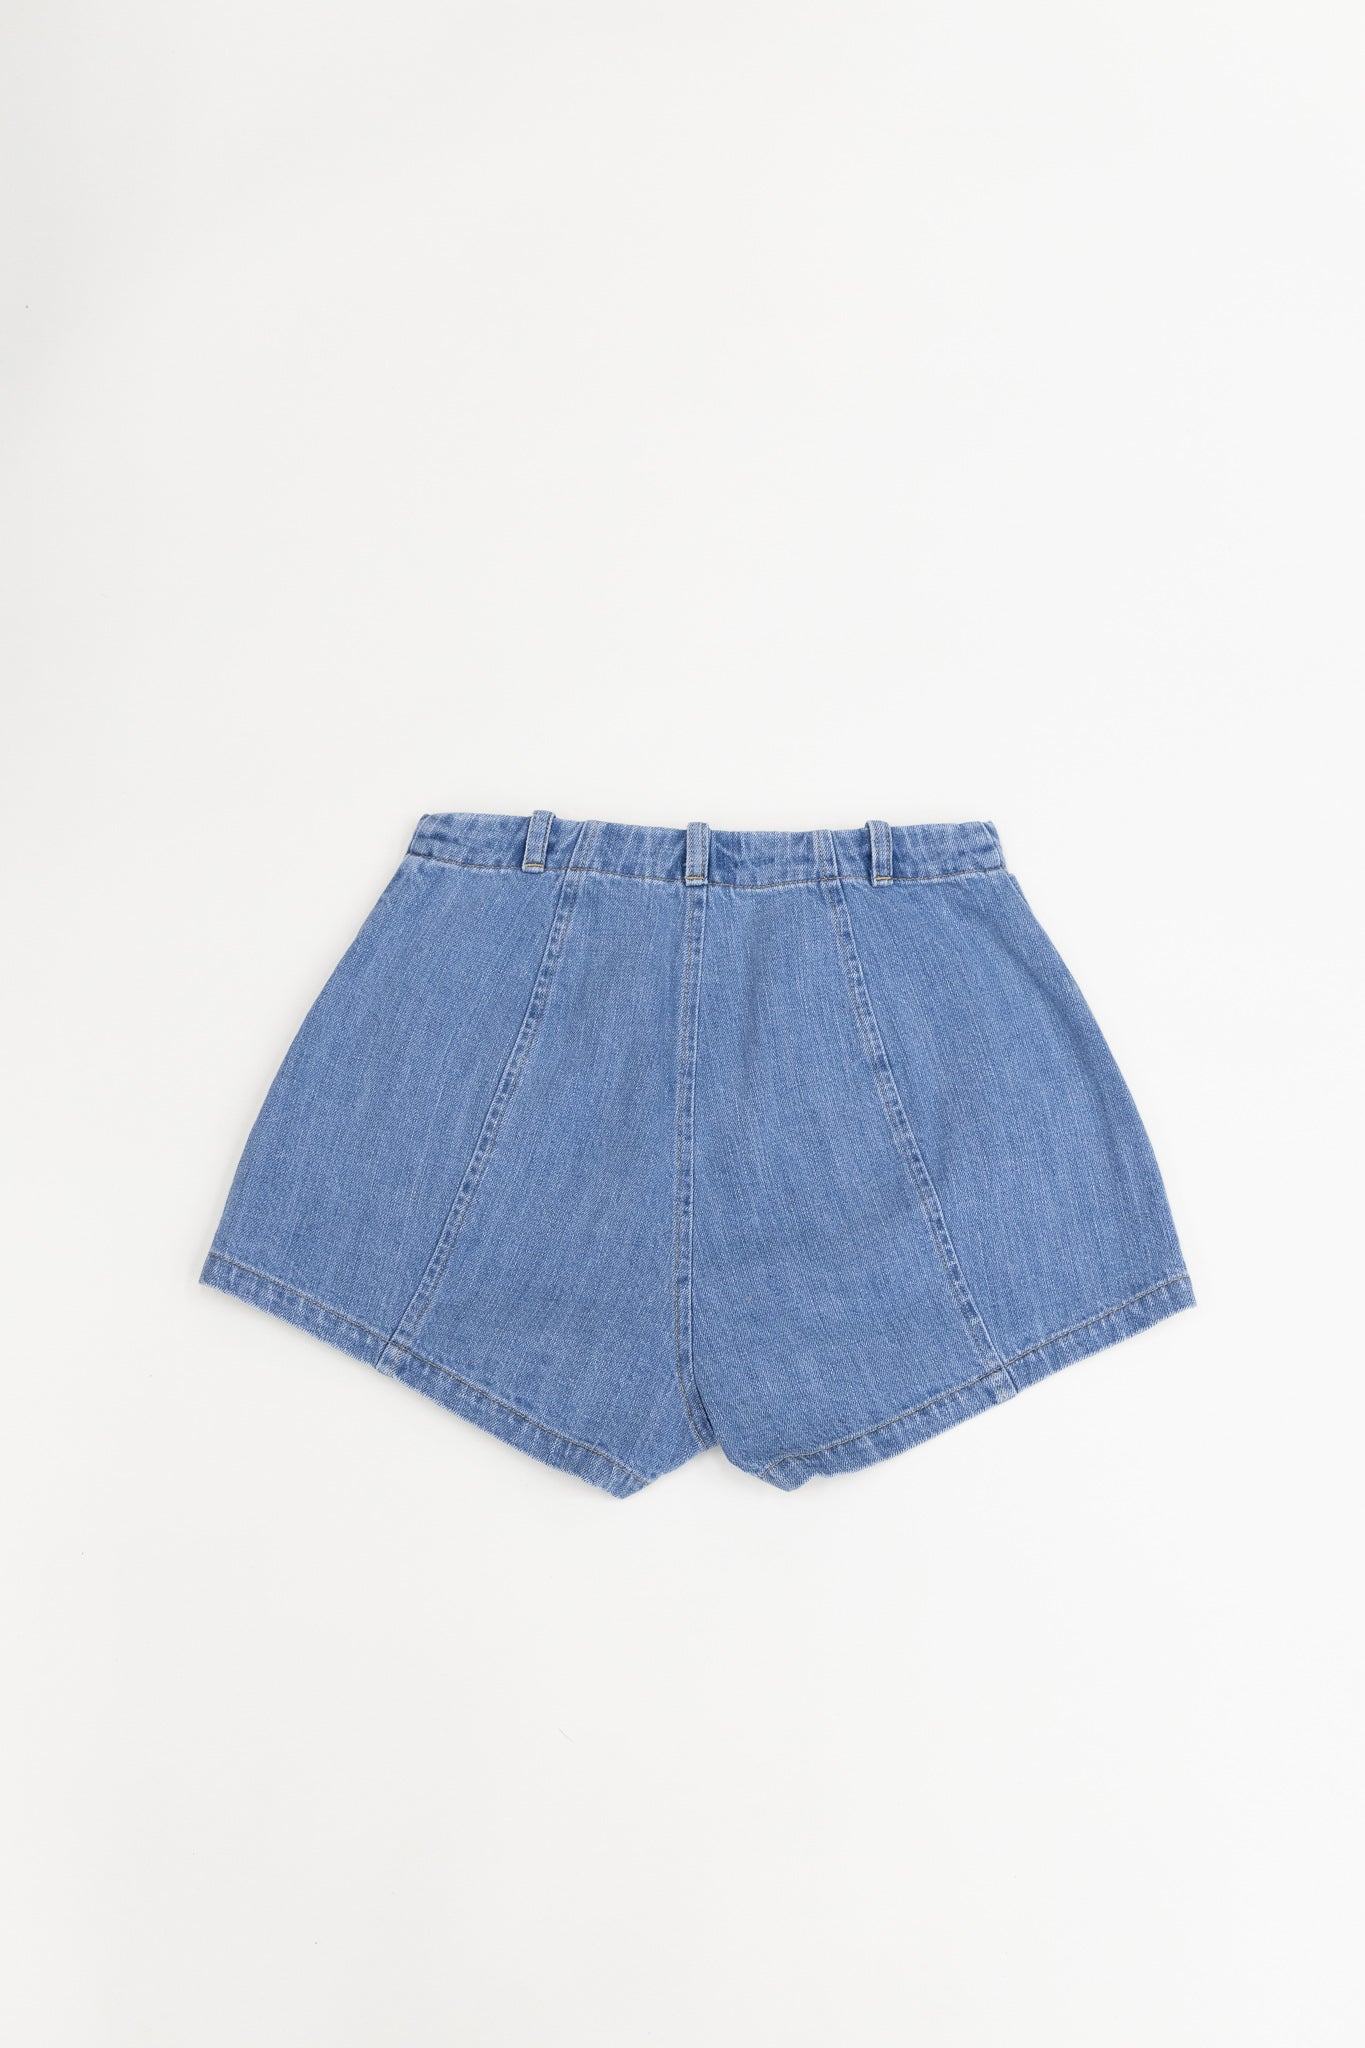 104 shorts, vintage indigo